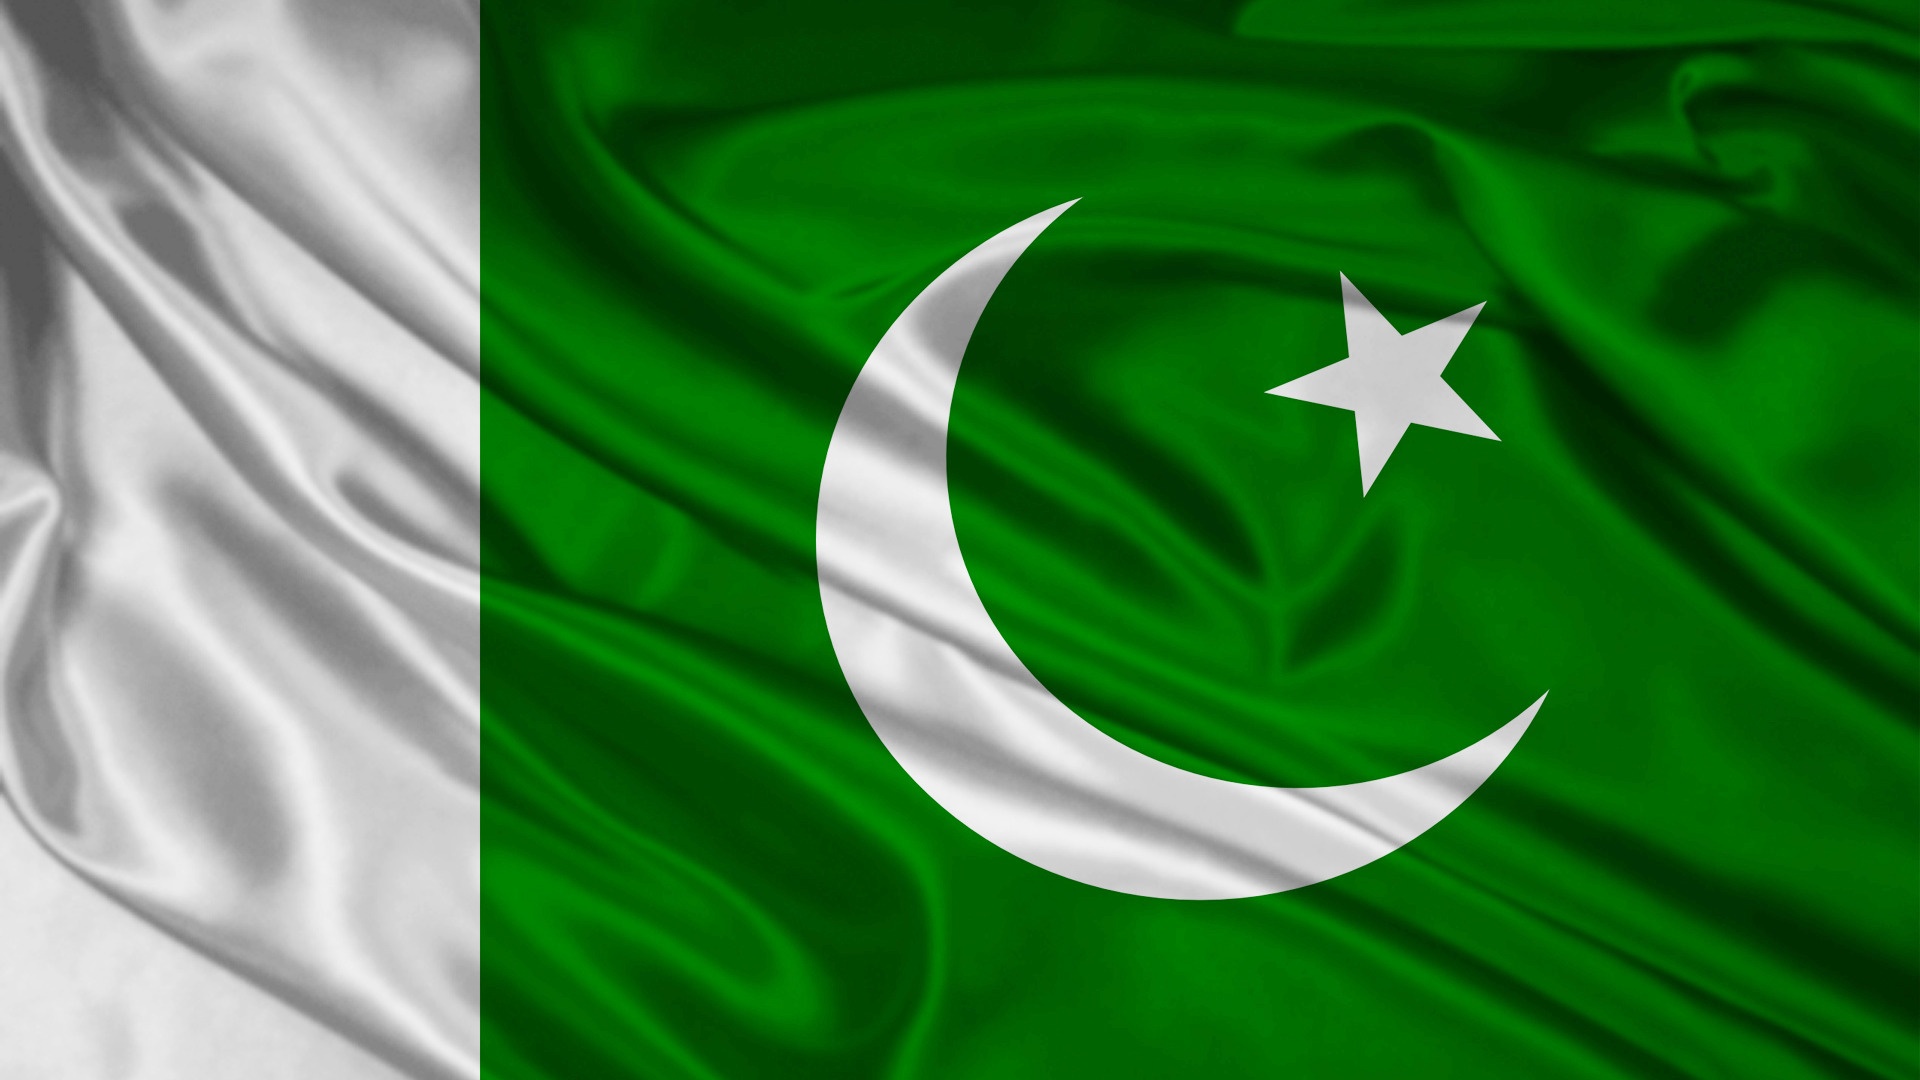 Pak Sar Zameen Shad Bad: The National Anthem of Pakistan